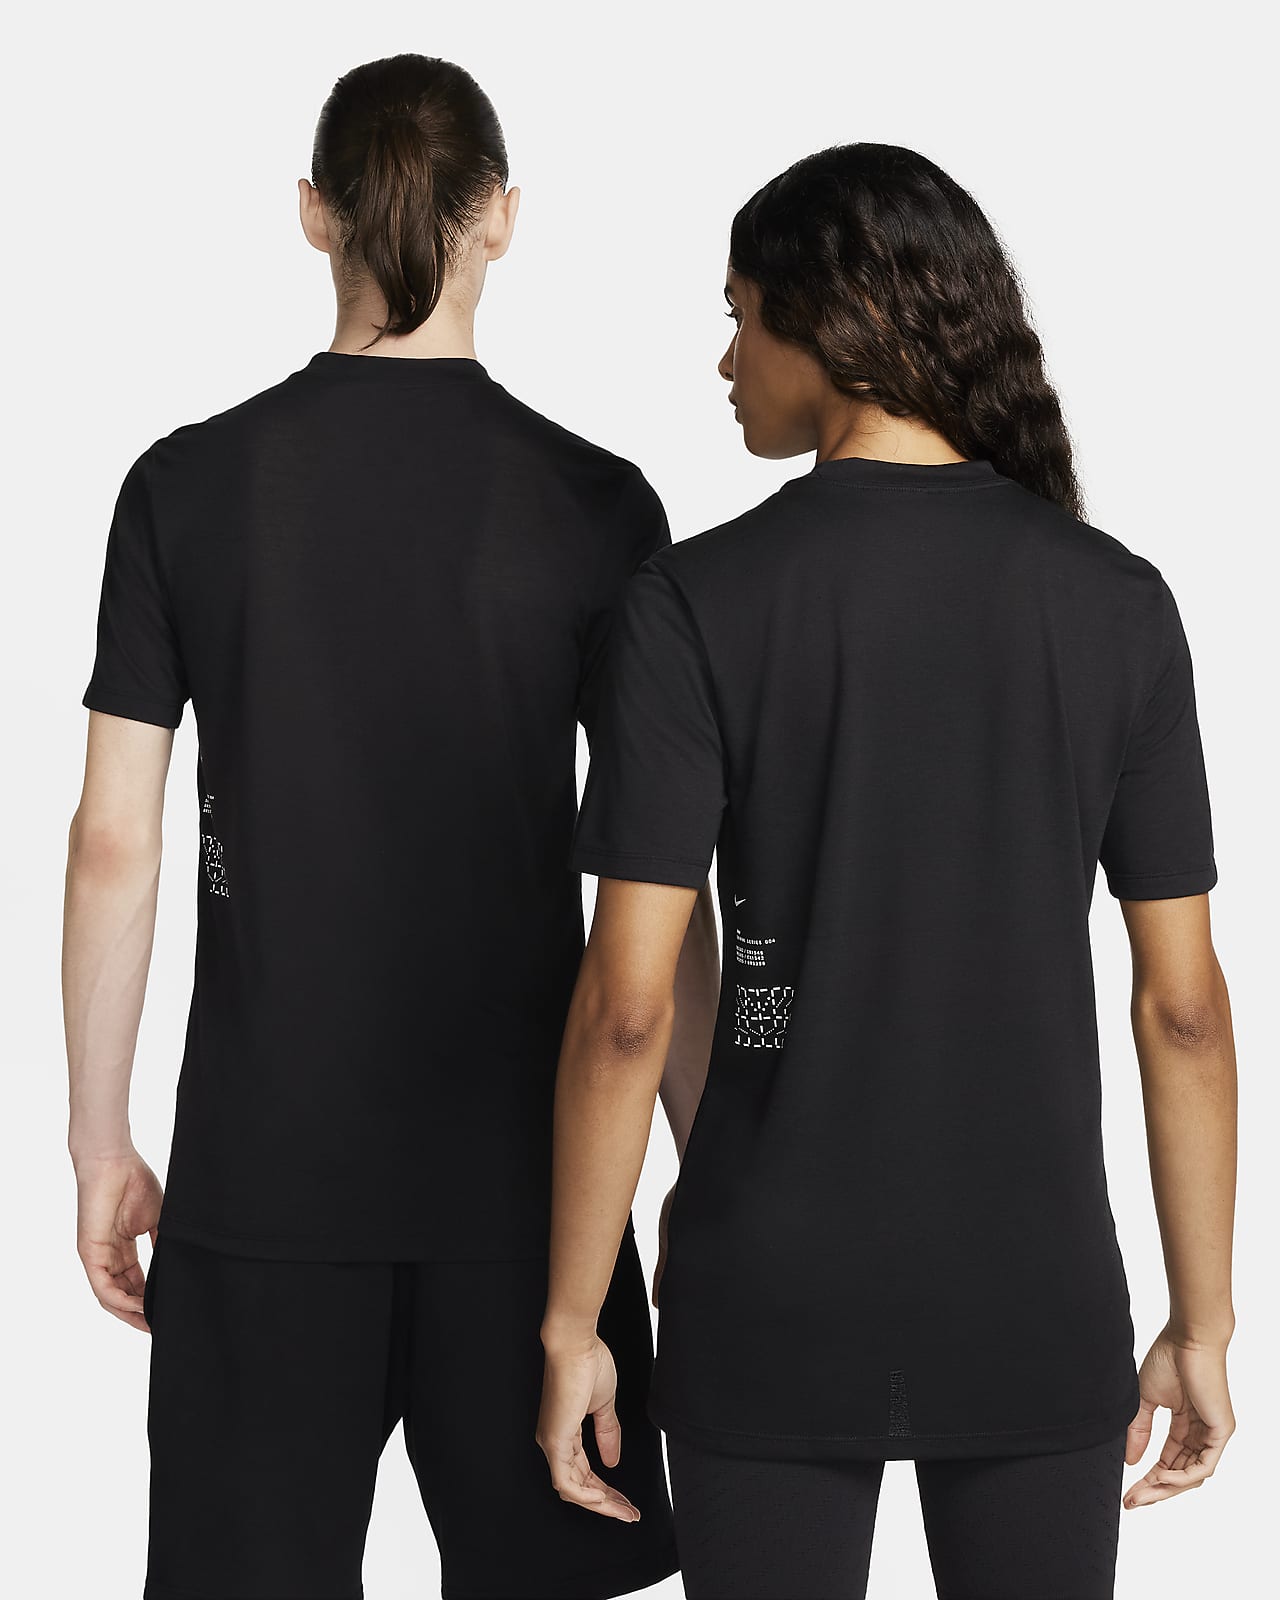 Nikelab x MMW Men's Short Sleeve Top Black